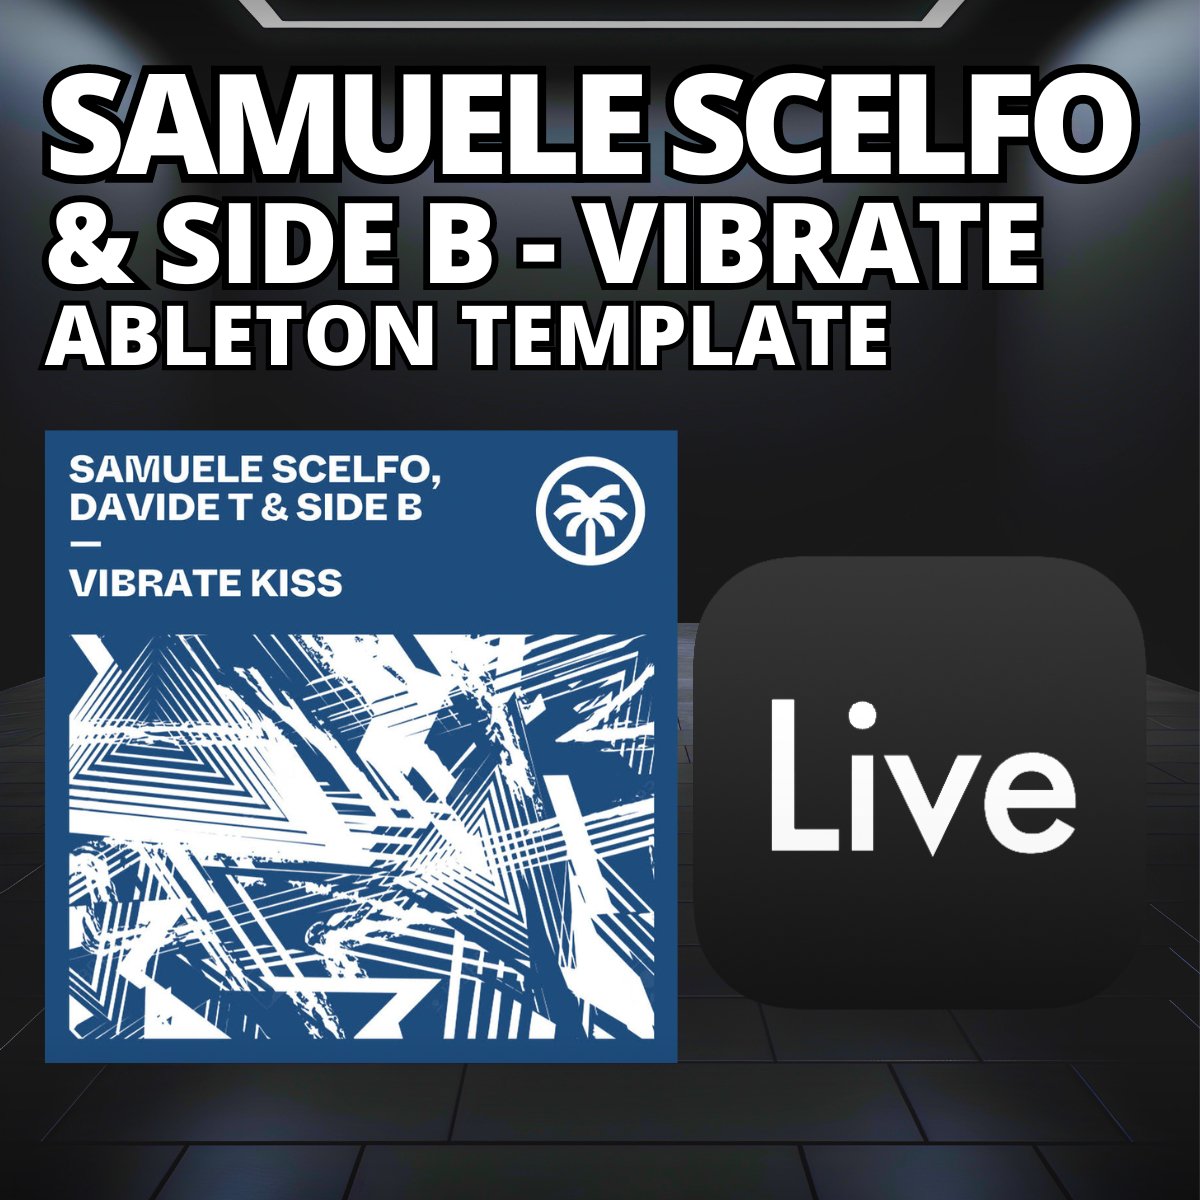 Samuele Scelfo, Side B - Vibrate [HOTTRAX] (Ableton Project) - Unconventional - Tunebat Marketplace